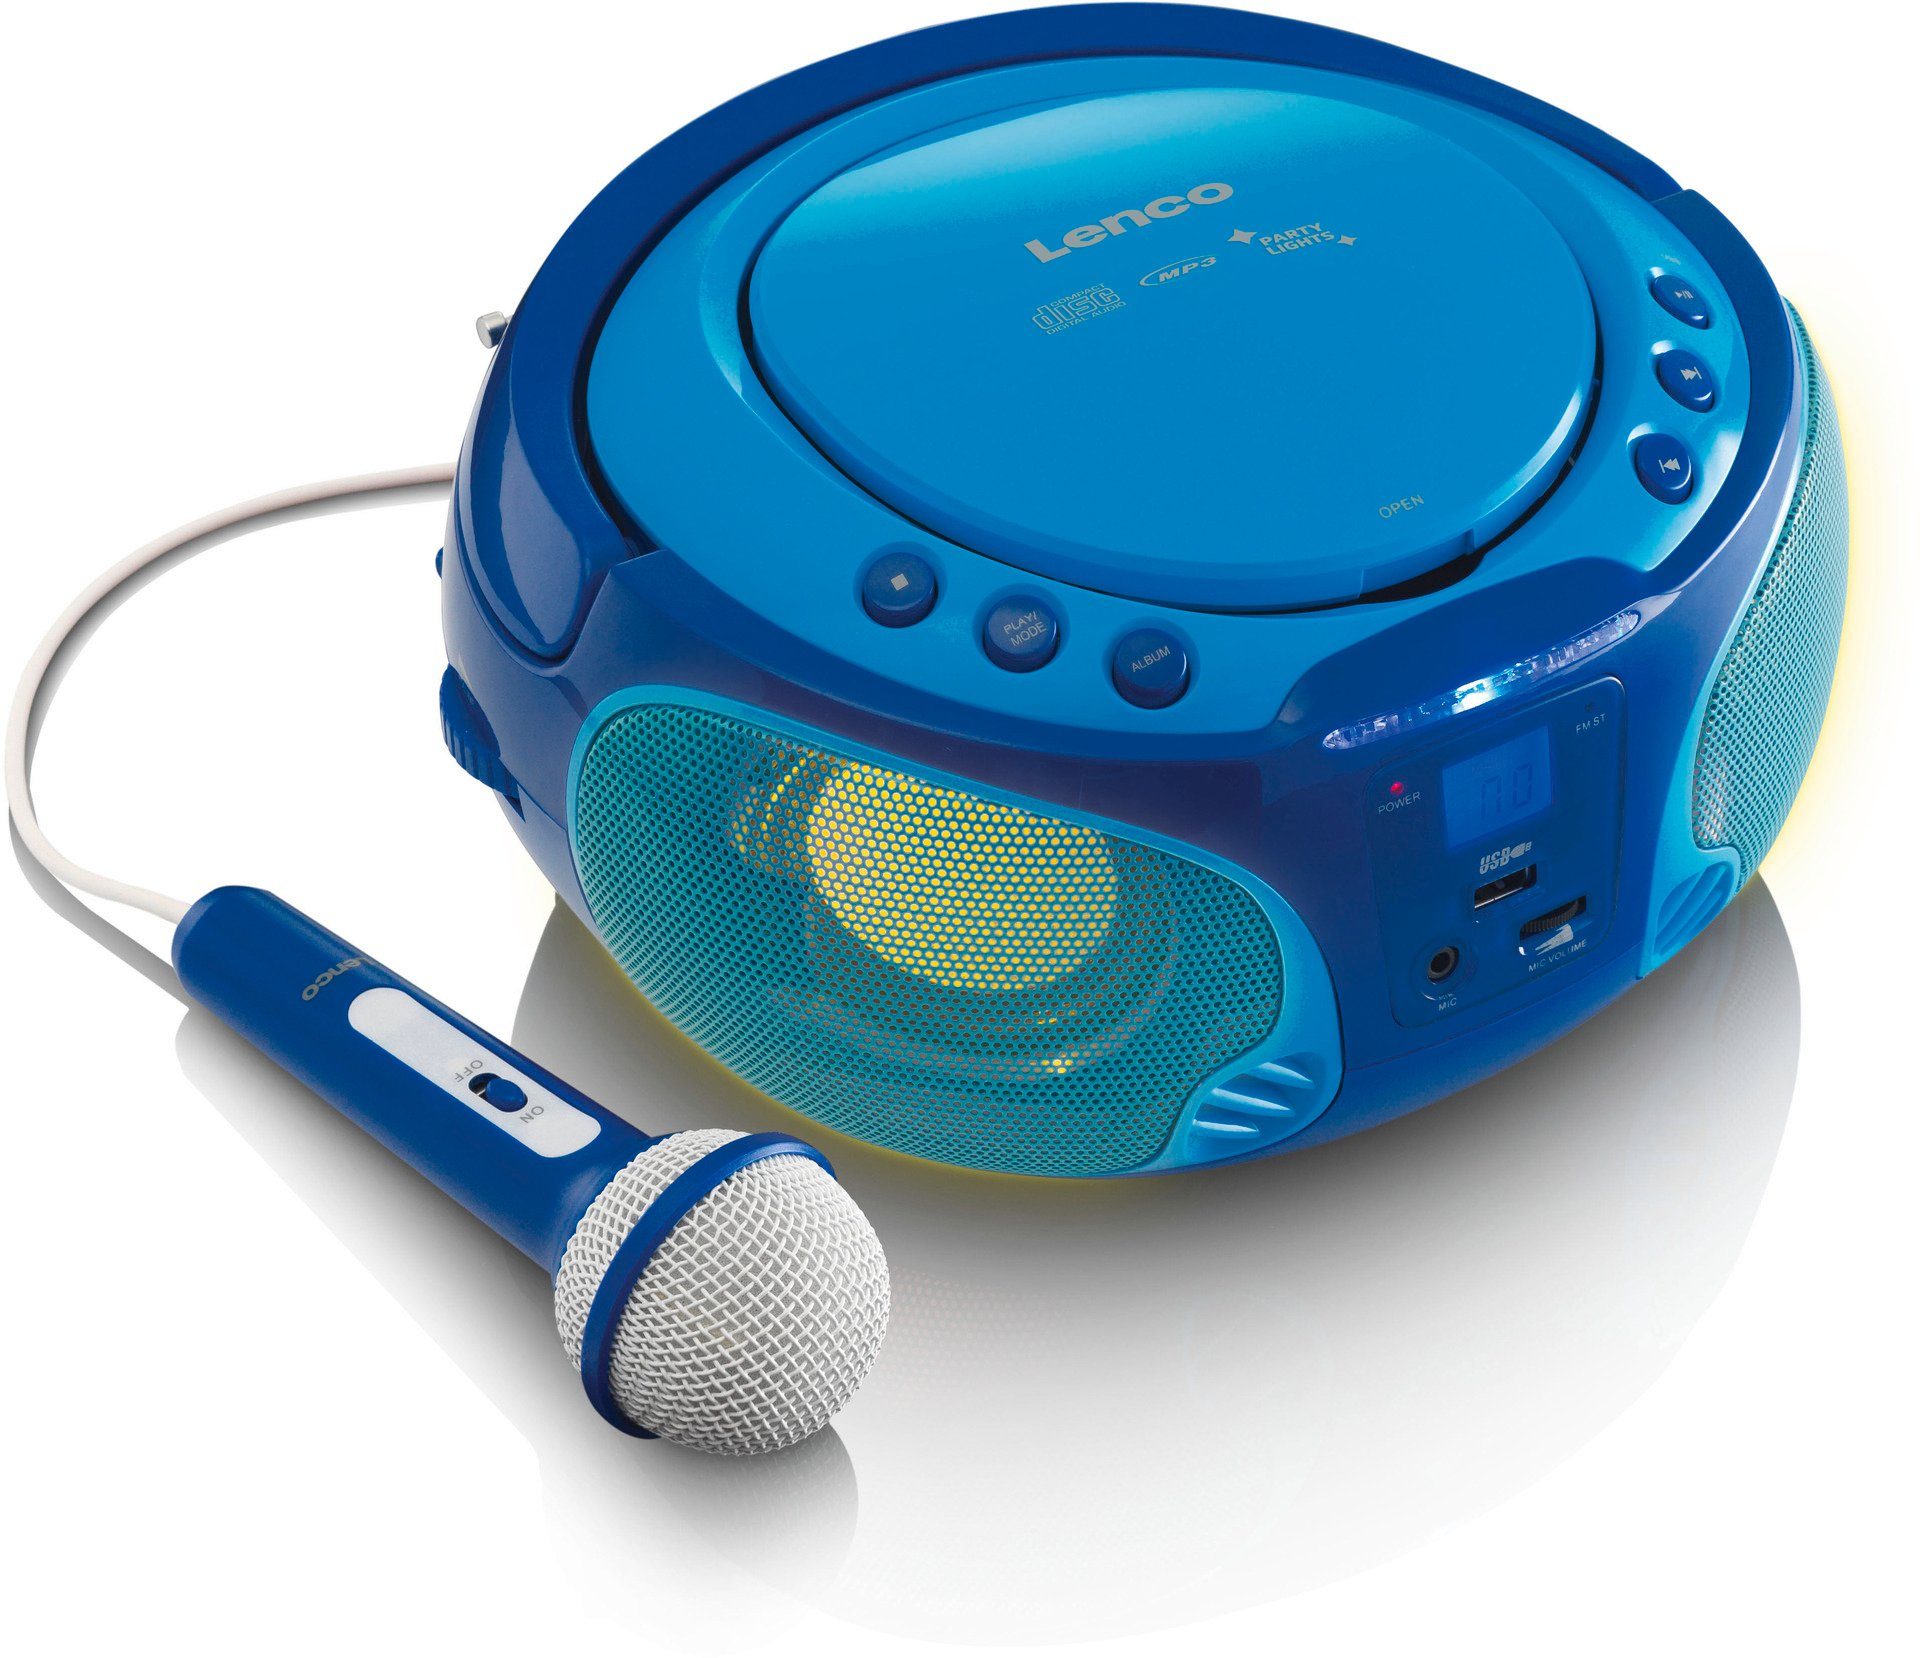 Lenco SCD-650BU CD-Radio m. MP3, USB, Lichteffekt, Mikro Boombox Blau